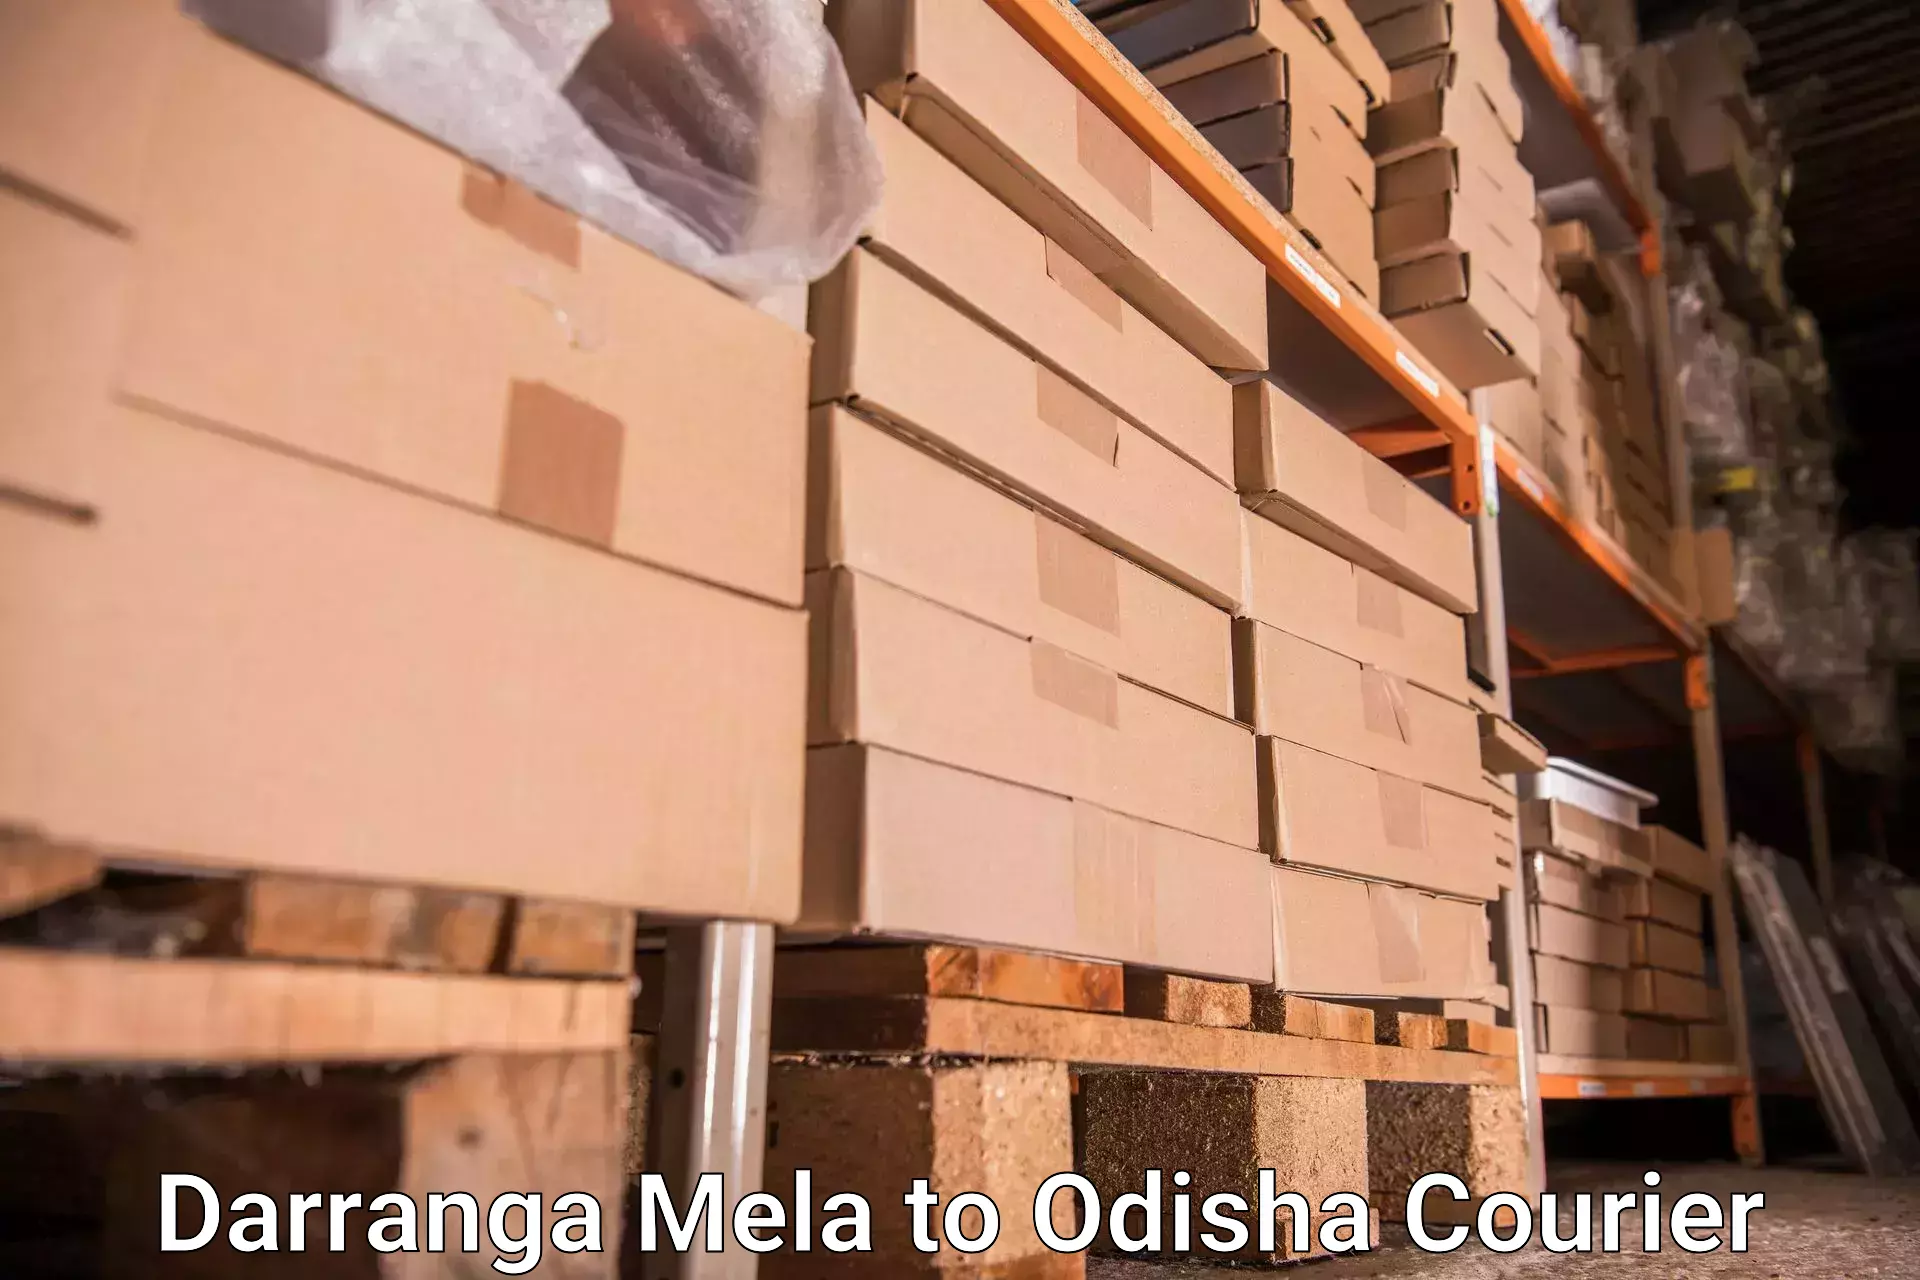 Baggage delivery optimization Darranga Mela to Kantamal